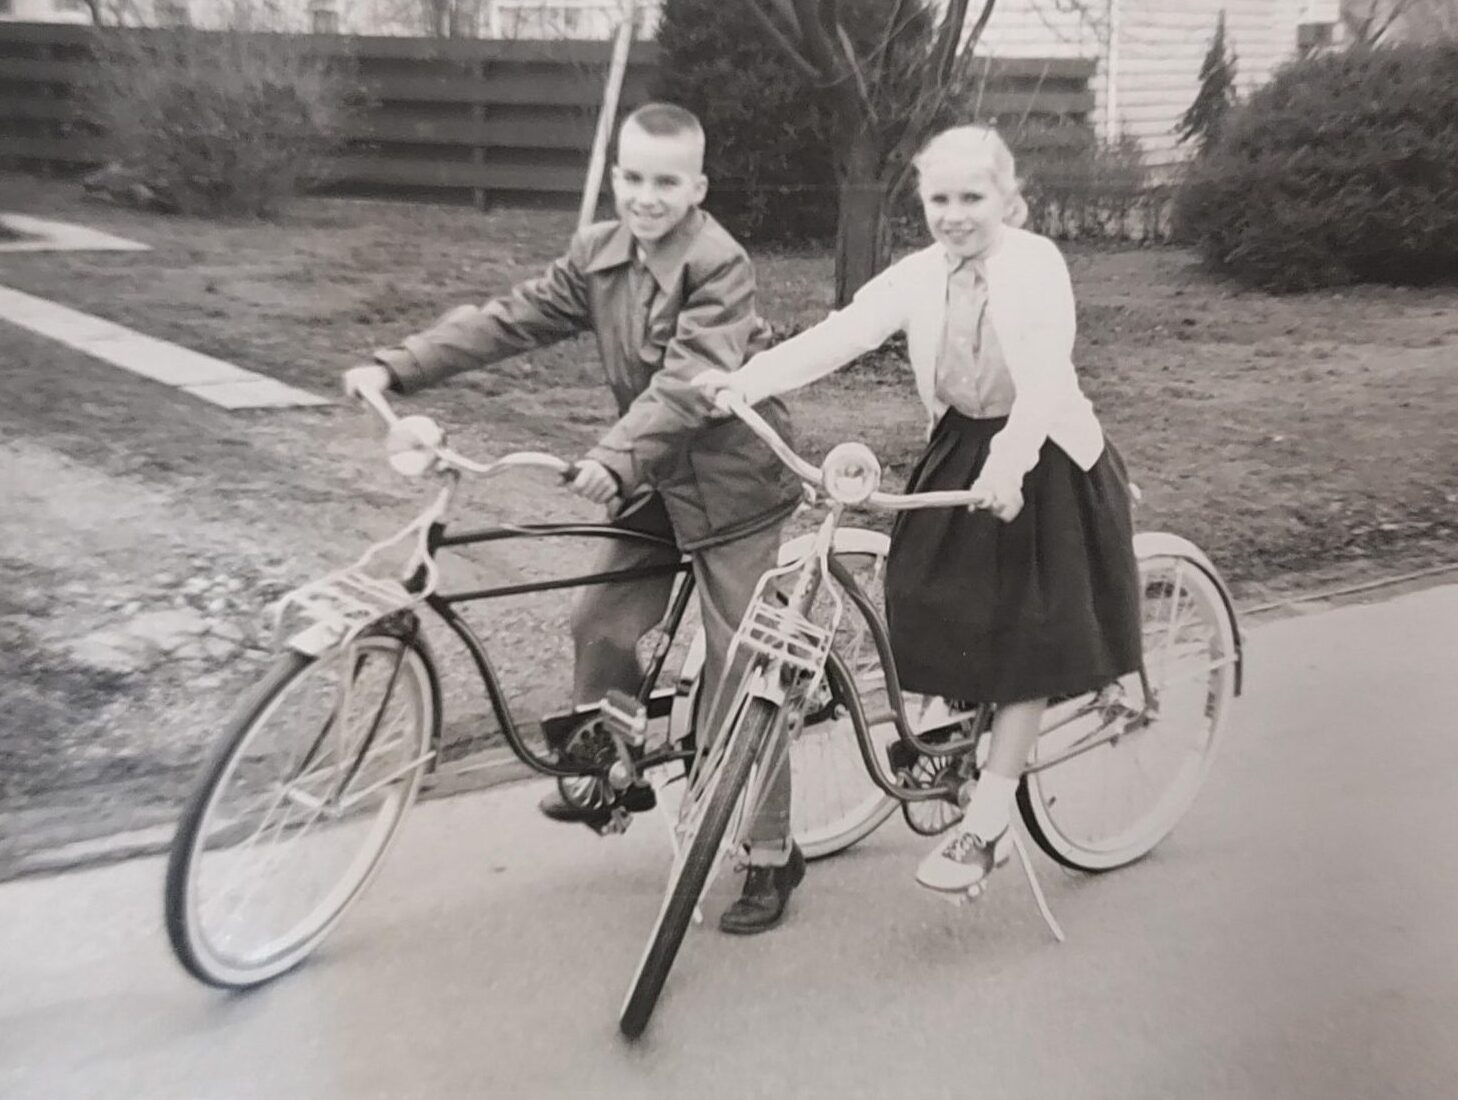 Concordia residents Richard and Carol Ann riding bikes